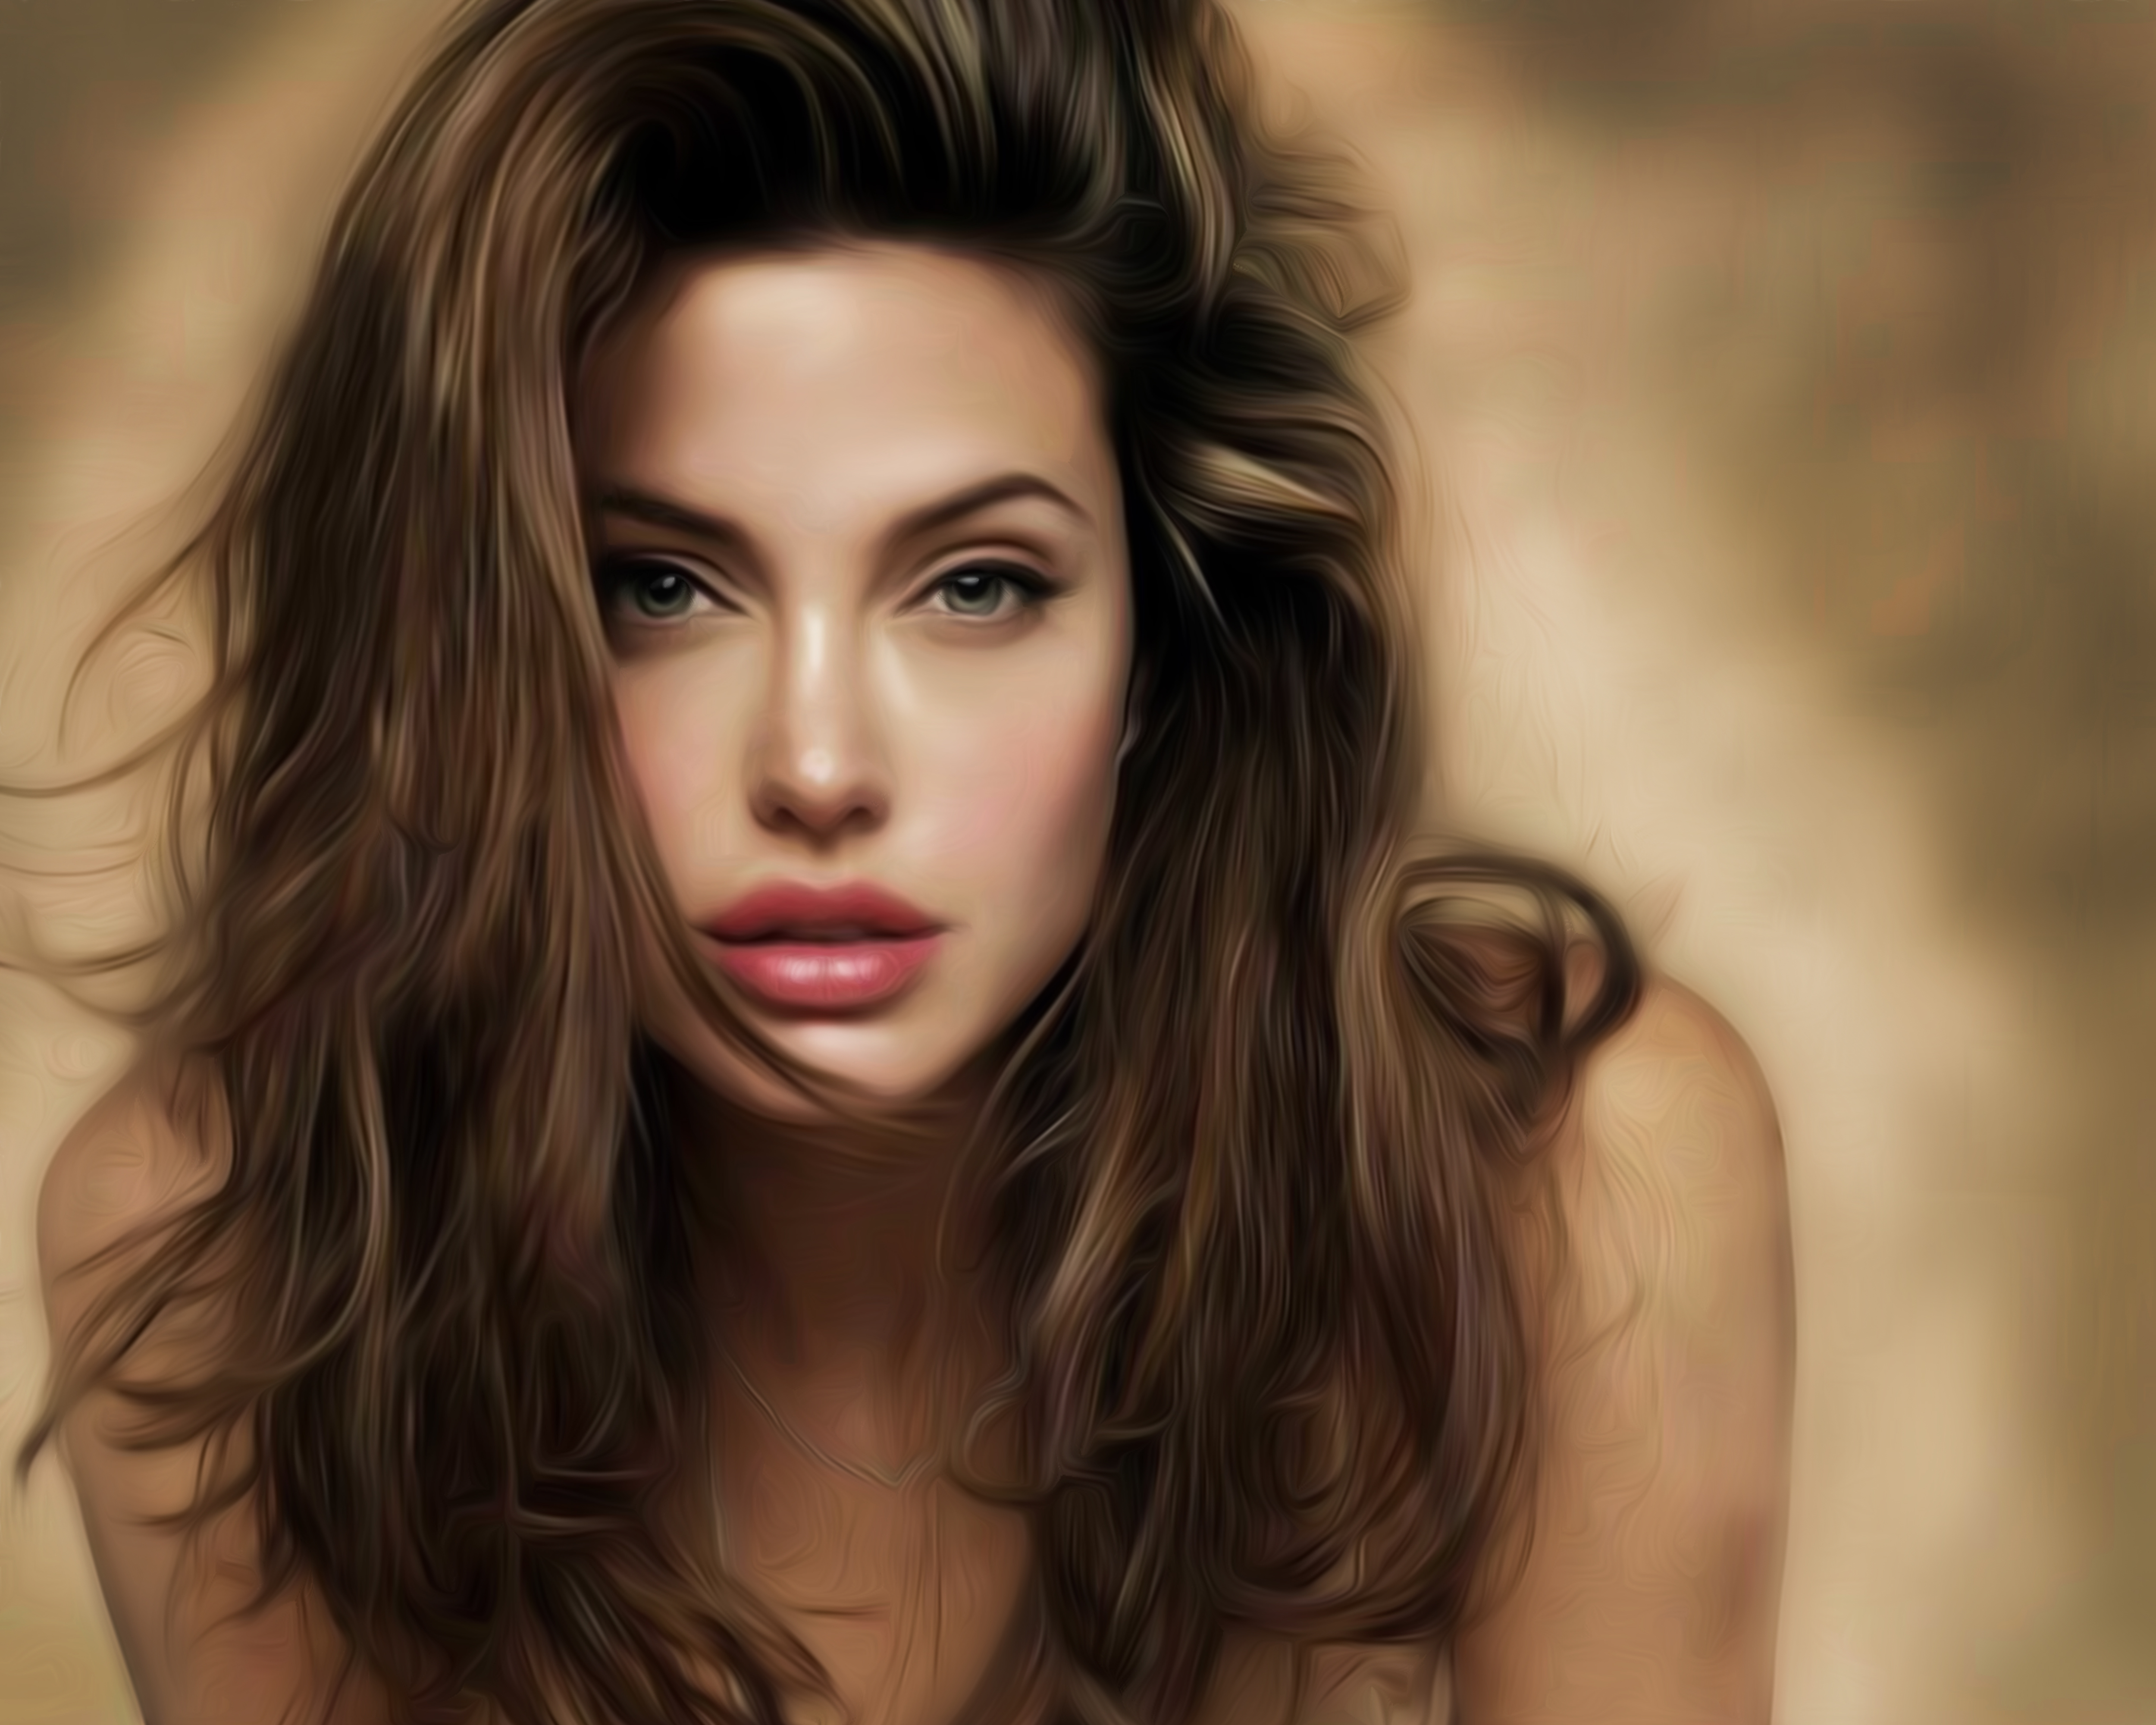 Качества девушки. Анджелина Джоли. Анджелина Джоли модель. Анджелина Джоли лицо. Анджелина Джоли портрет.